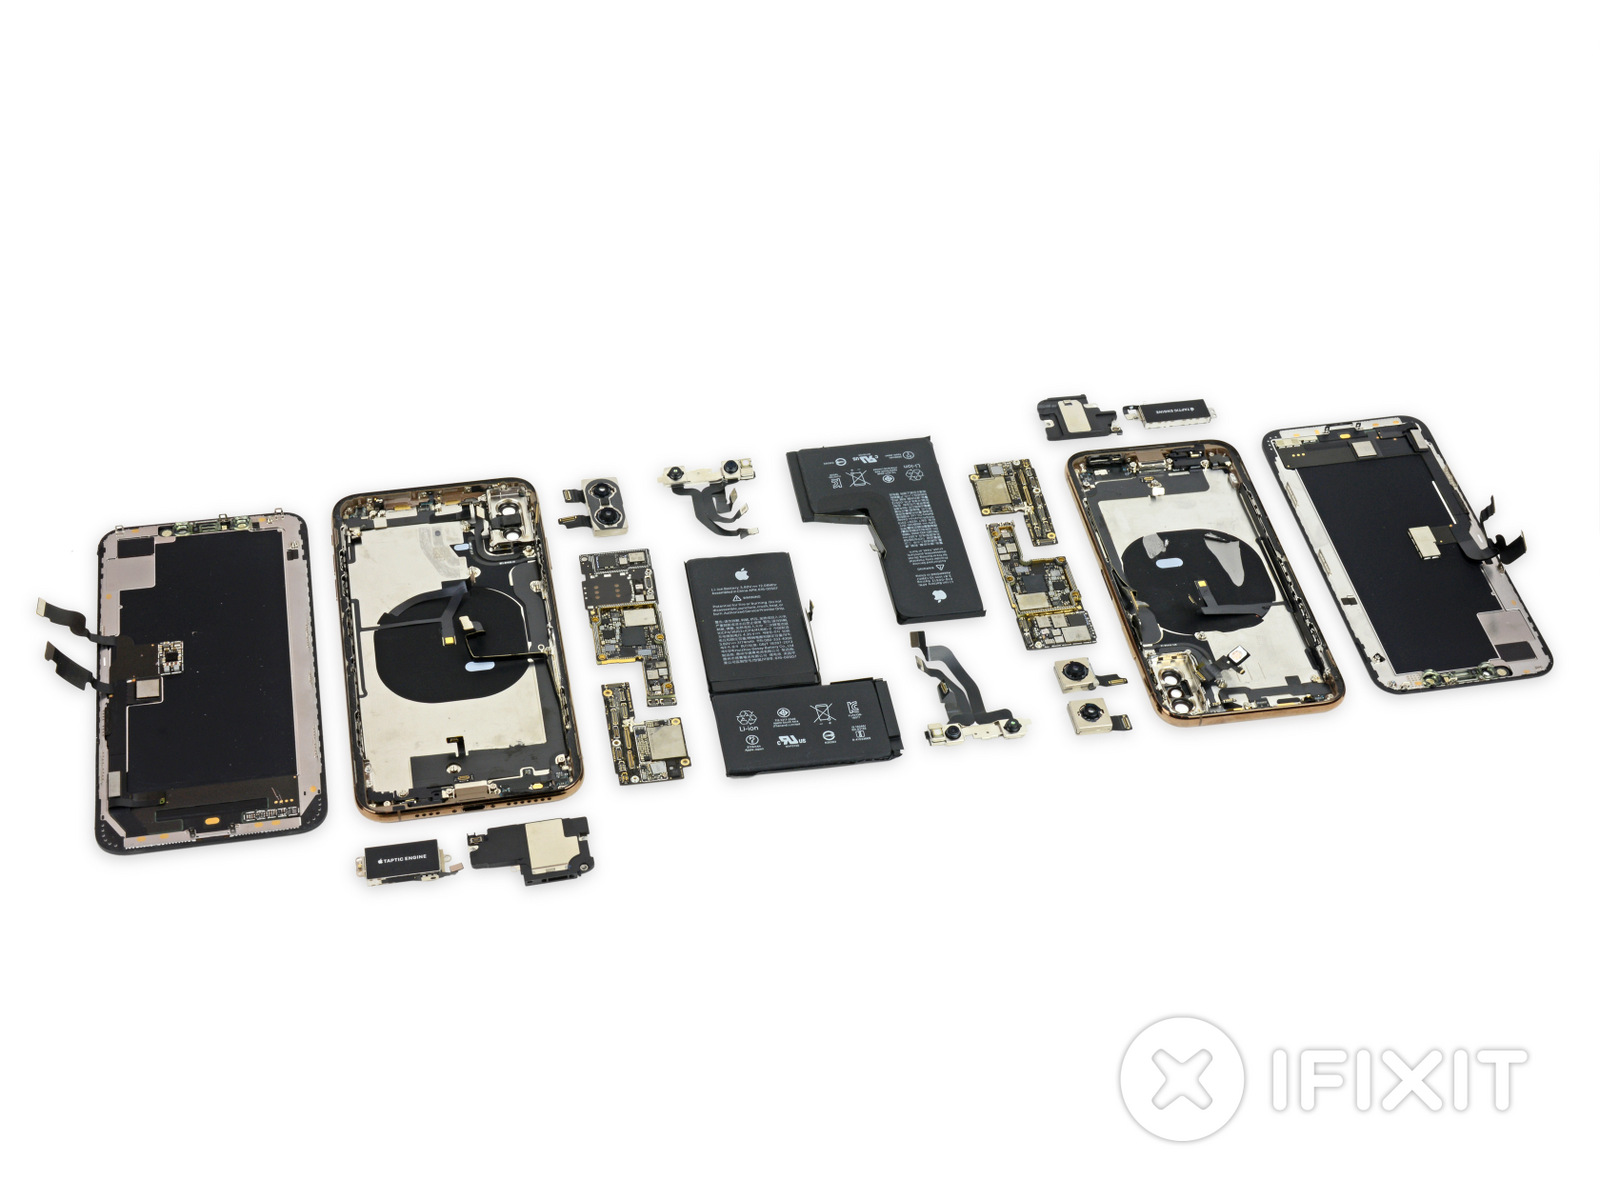 iPhone XS teardown shows new battery design